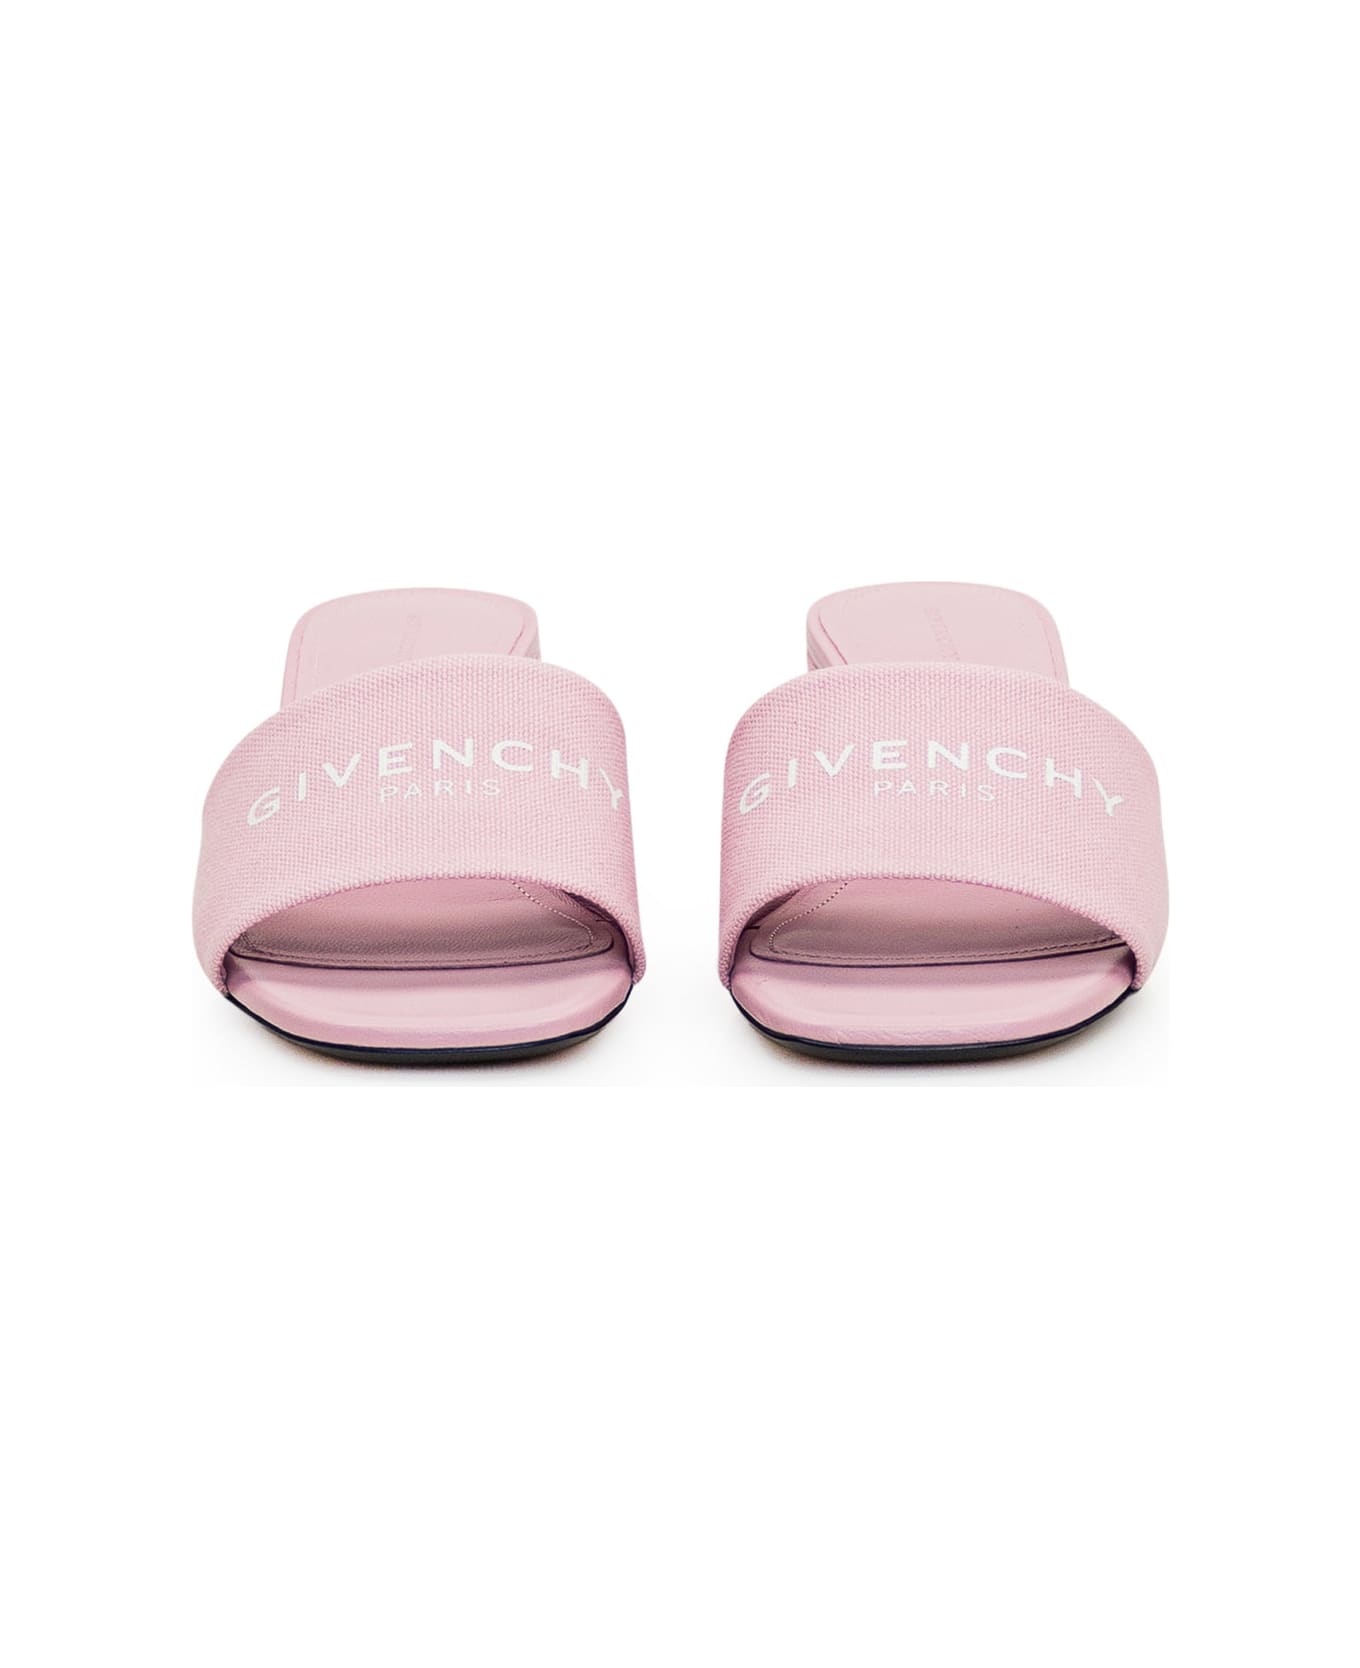 Givenchy 4g Sandals - OLD PINK サンダル